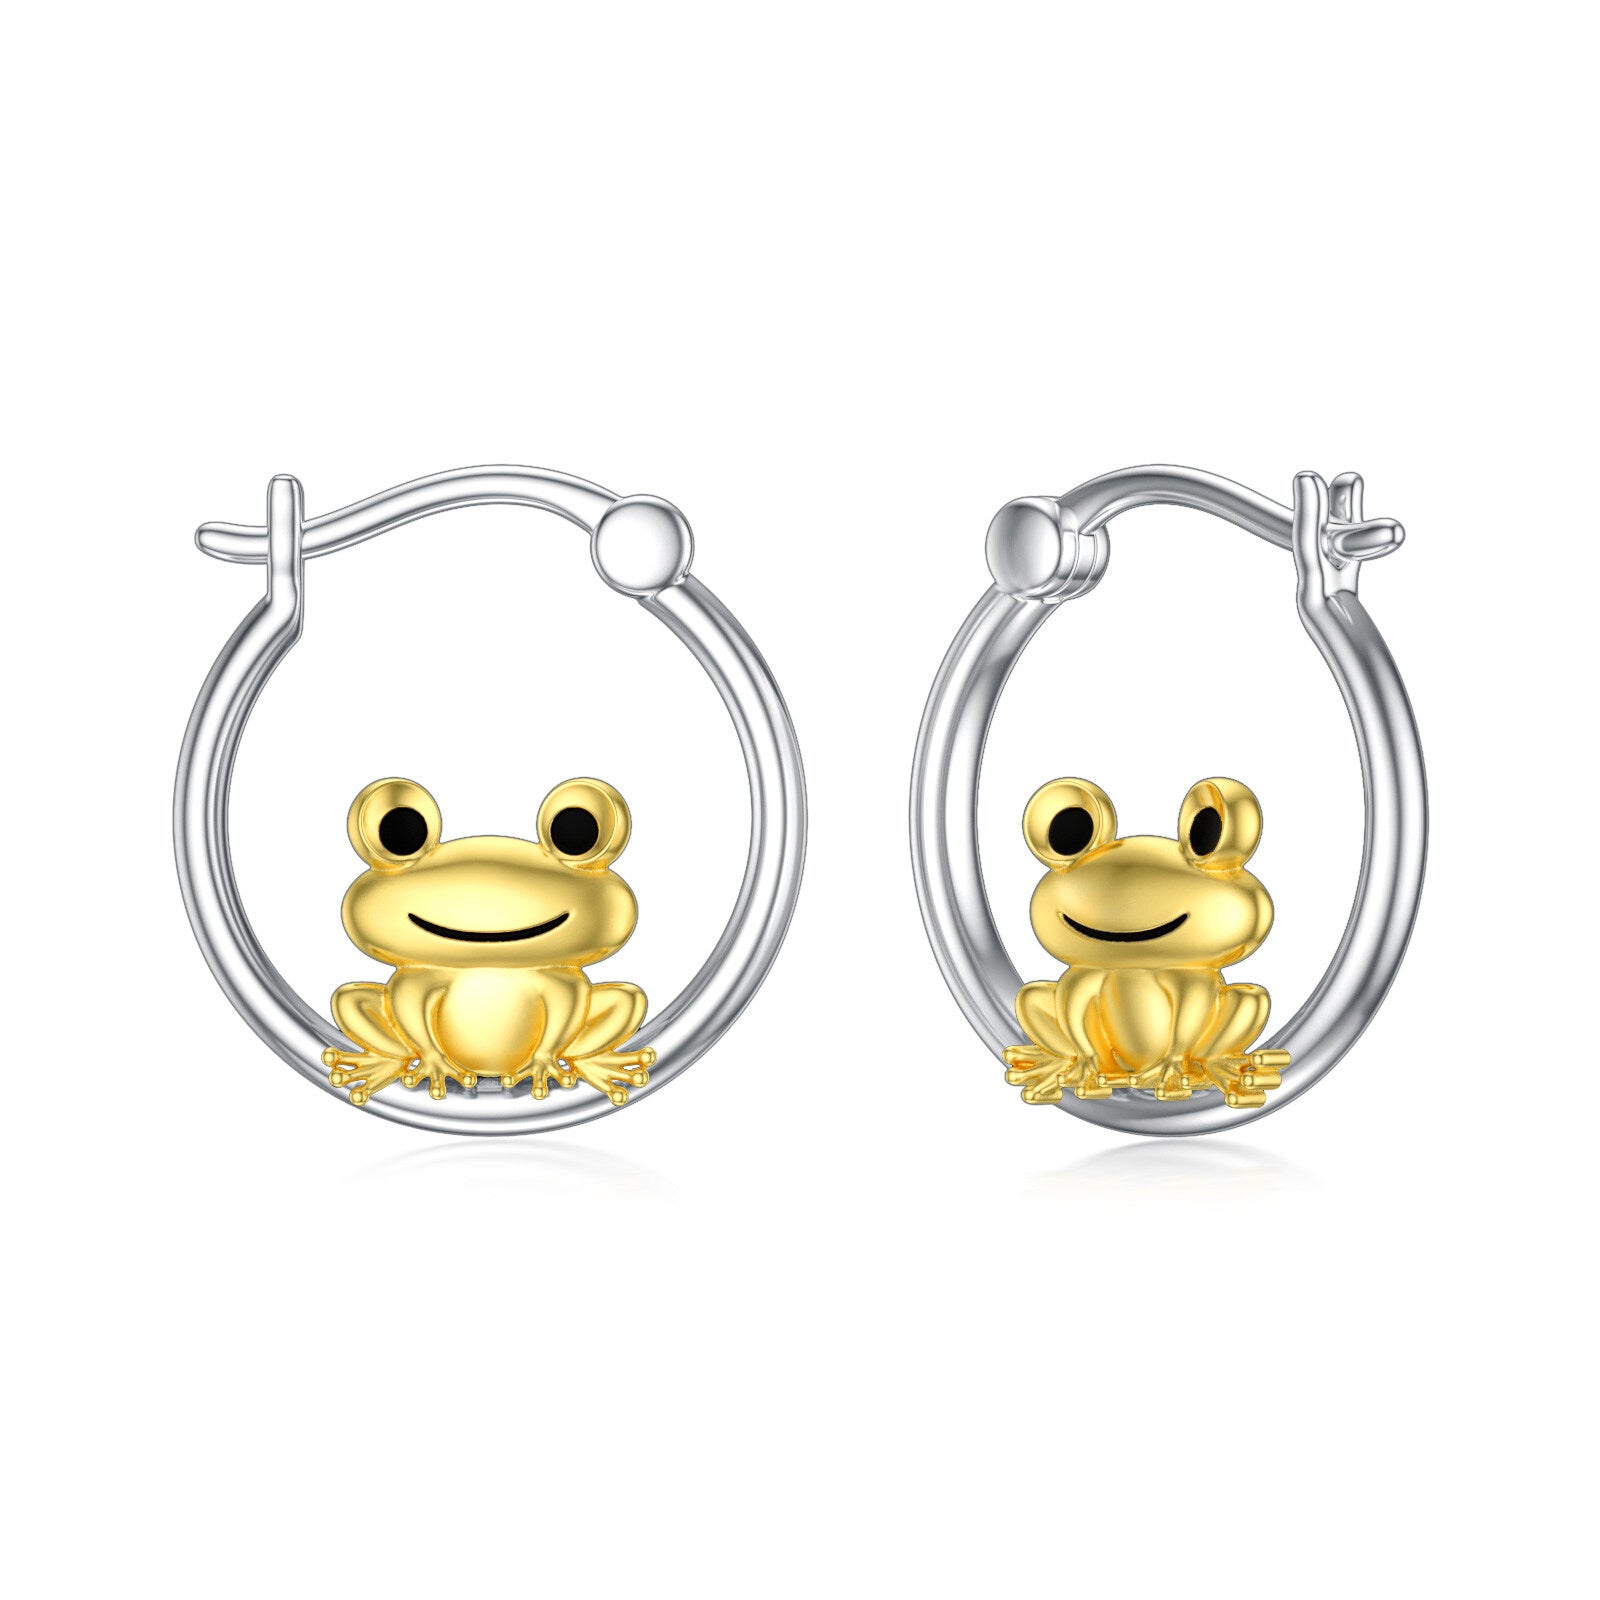 Frog Earrings Hoop Frog Jewelry Gifts for Women Girl Birthday